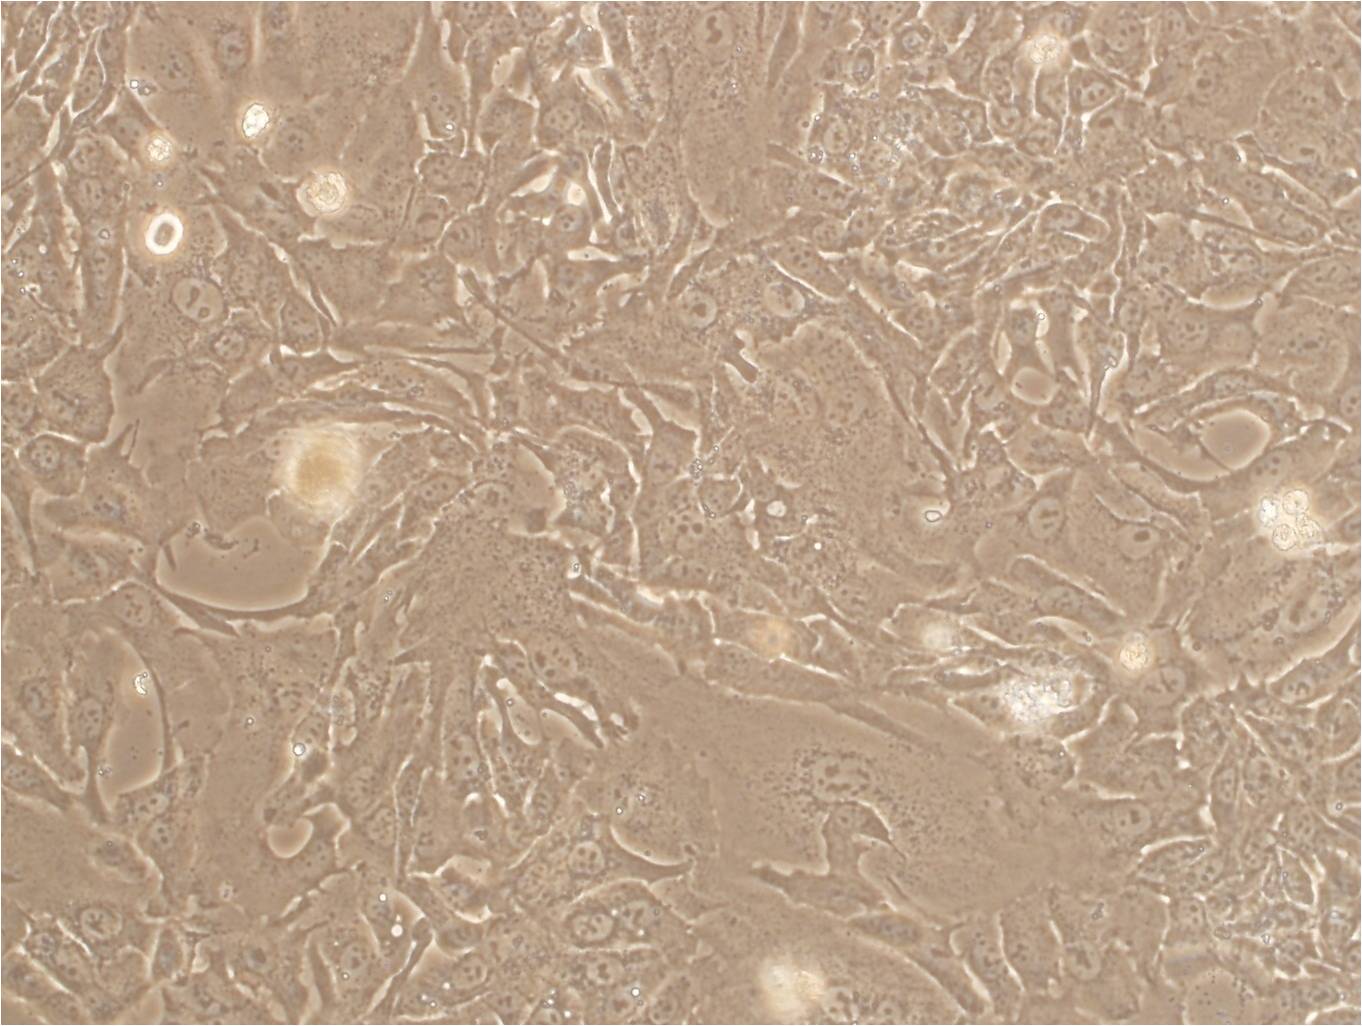 H9c2(2-1)细胞：大鼠胚胎心肌细胞系